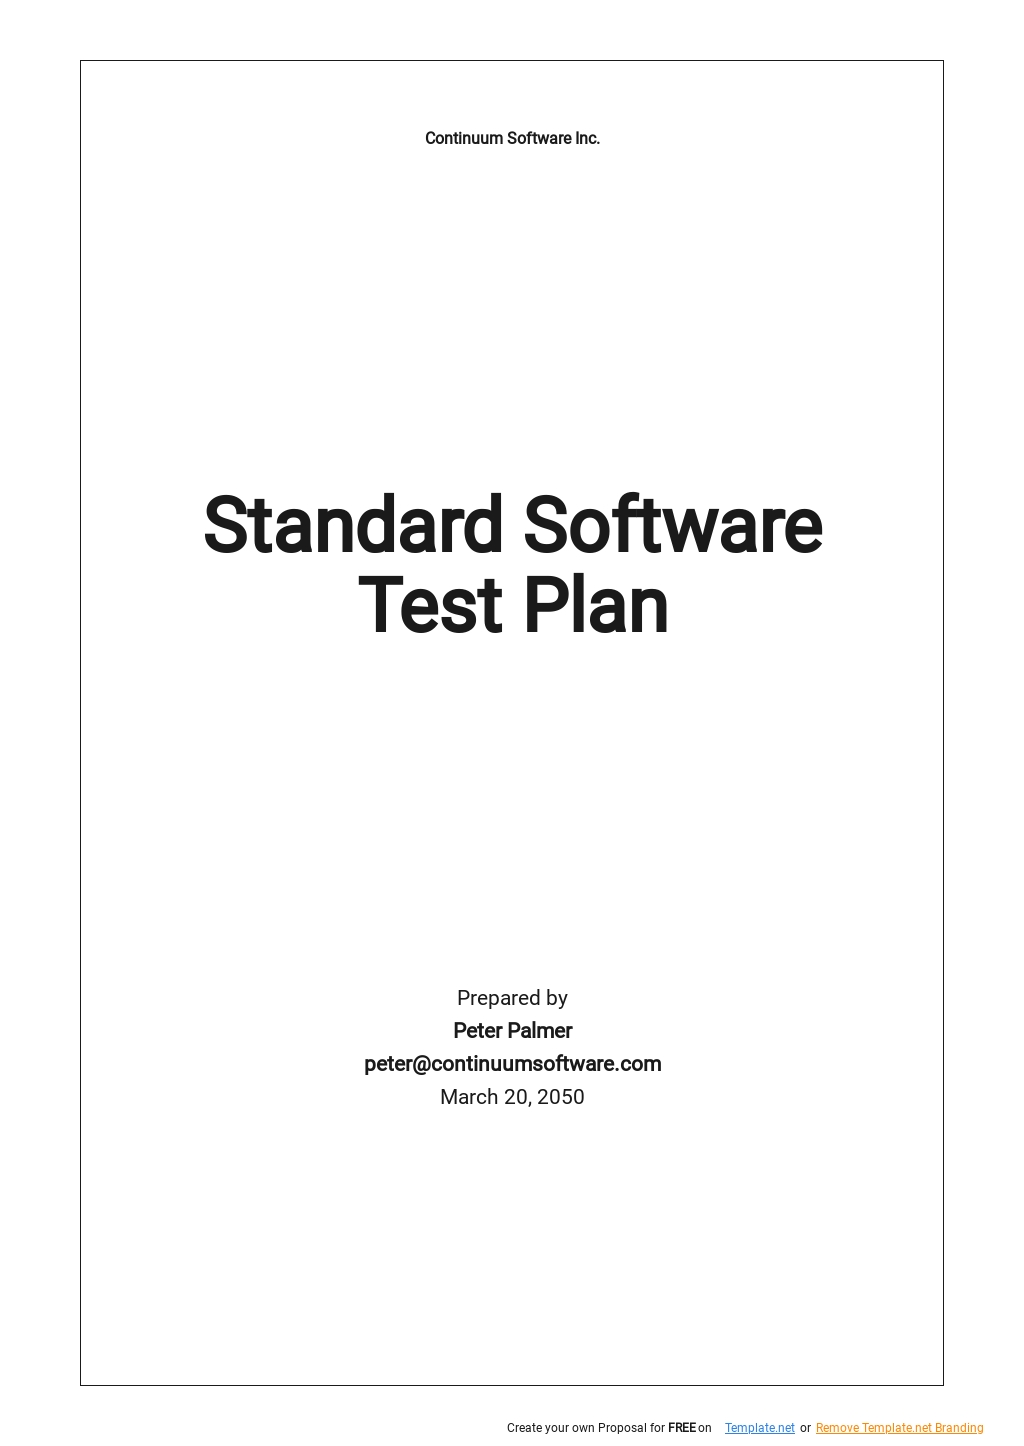 Free Standard Software Test Plan Template.jpe